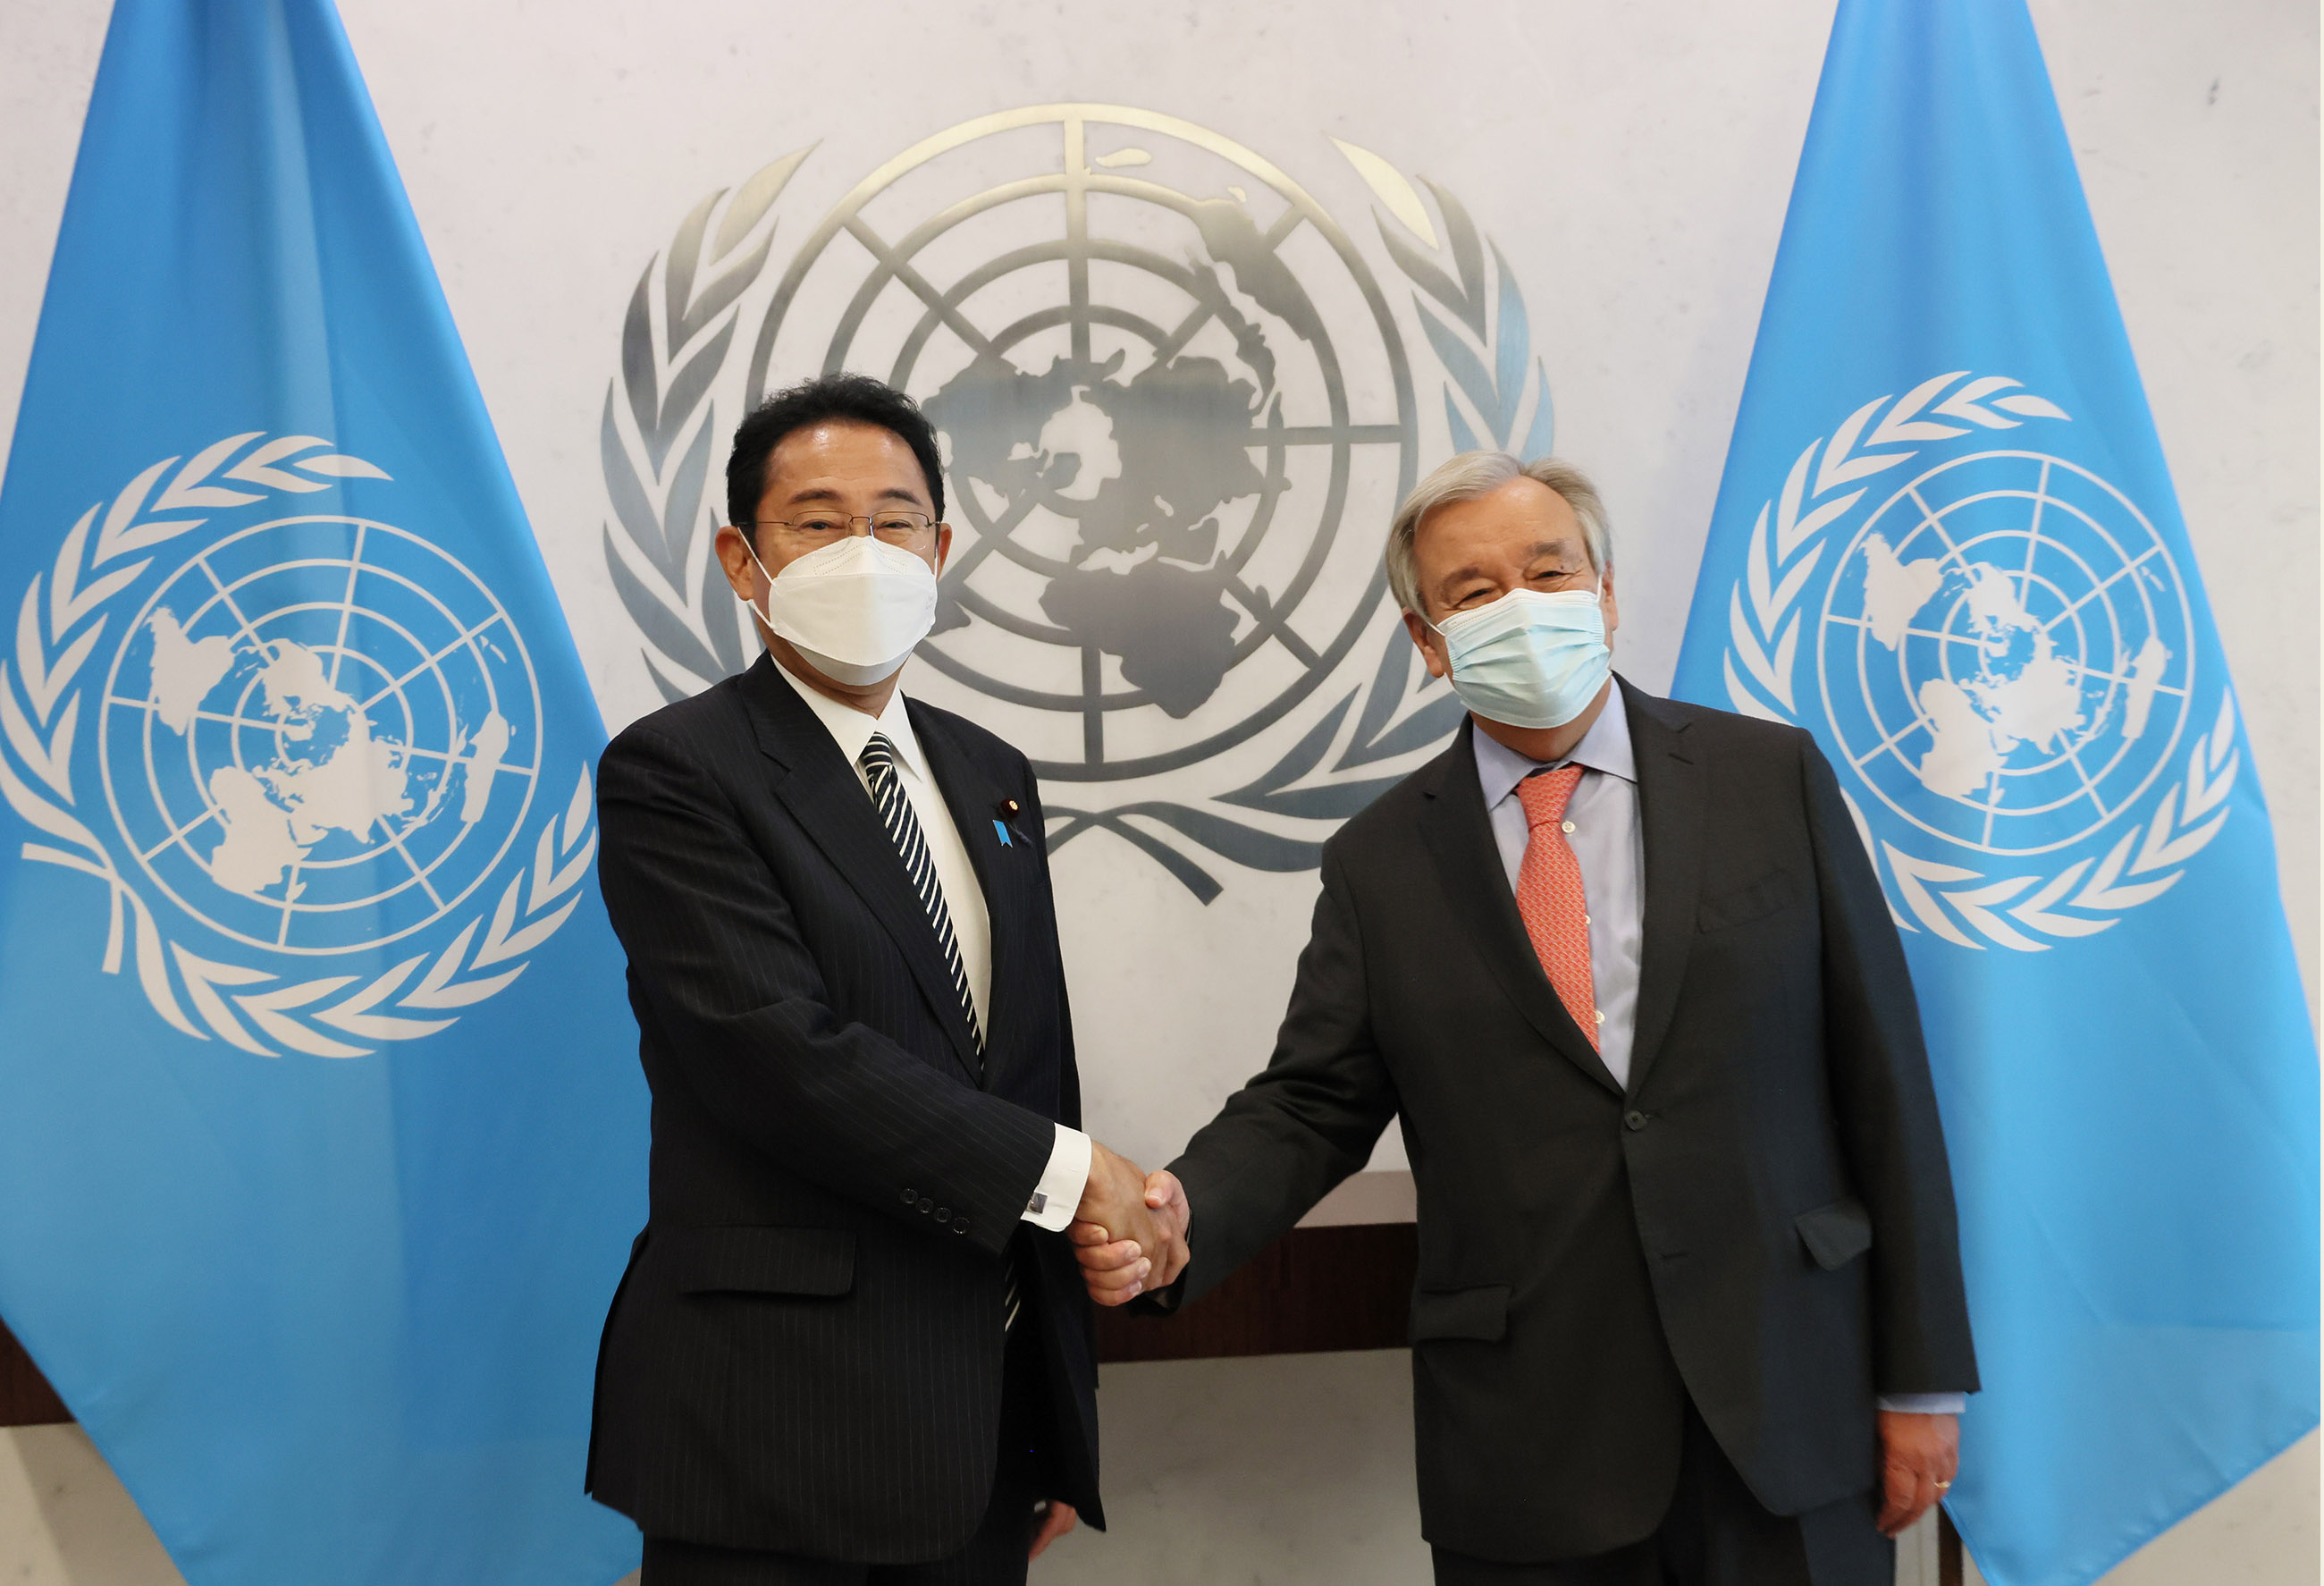 Prime Minister Kishida and UN Secretary-General Guterres shaking hands